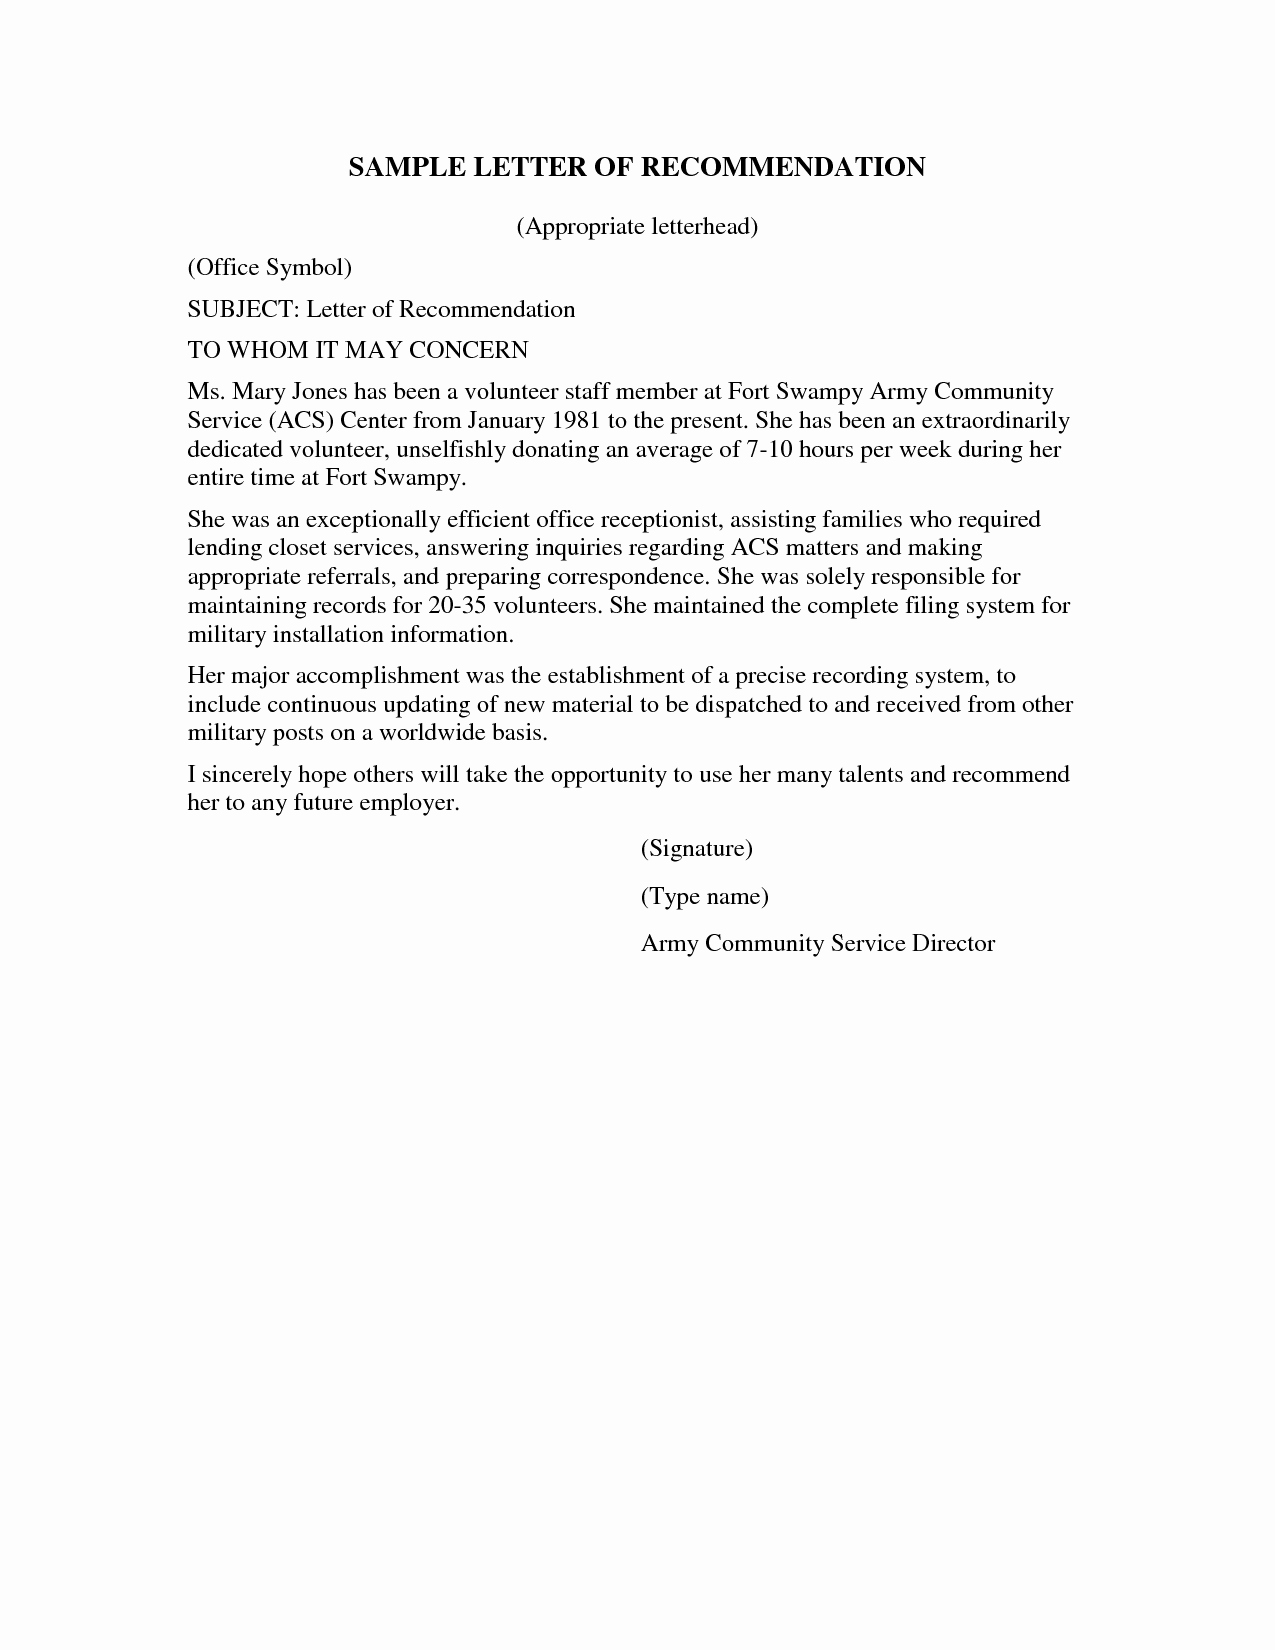 Letter Of Recommendation for Volunteer Unique Munity Service Letterhead Sample